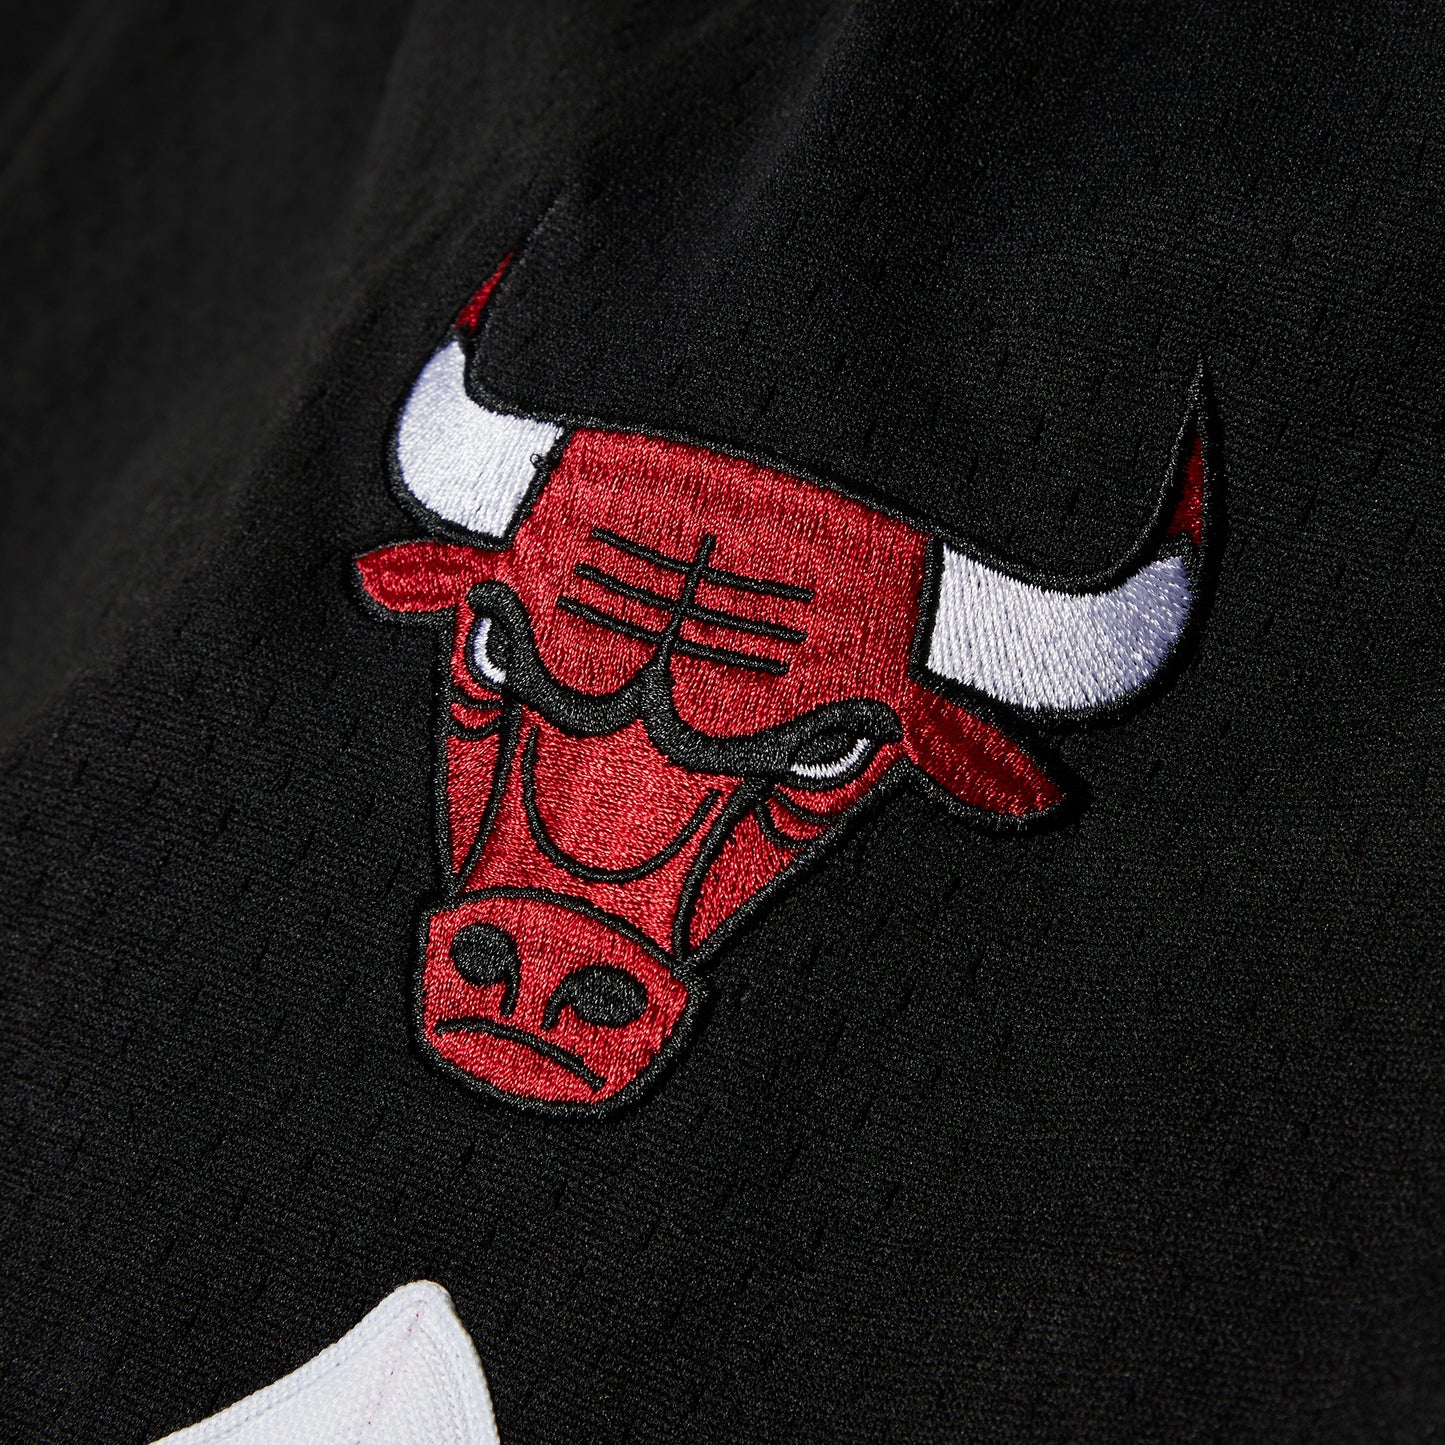 Mitchell & Ness Authentic Shorts - Chicago Bulls '97 (Black)